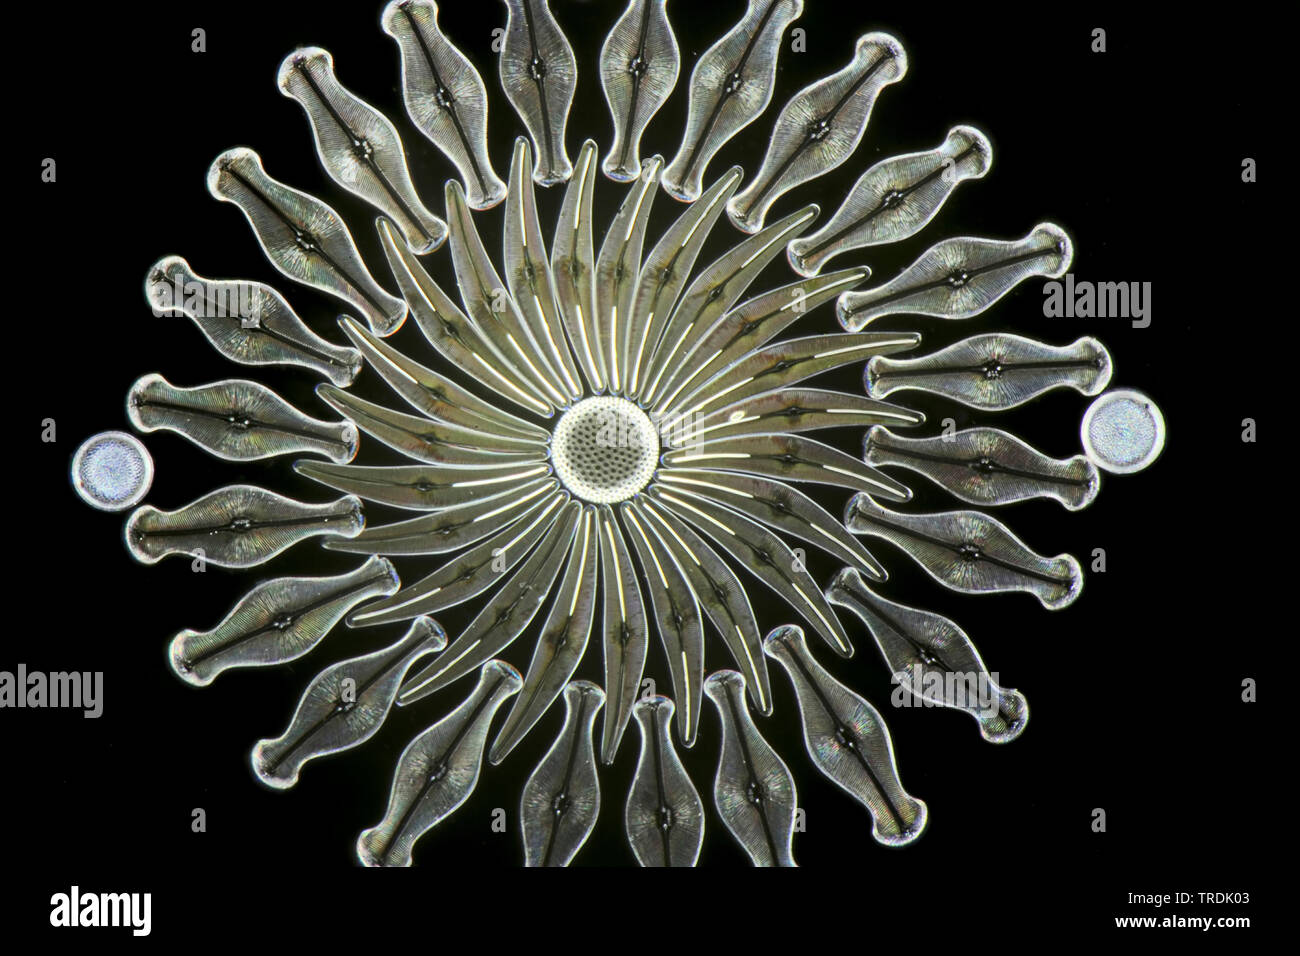 diatom (Diatomeae), dioatomeen in darkfield, x 24 Stock Photo